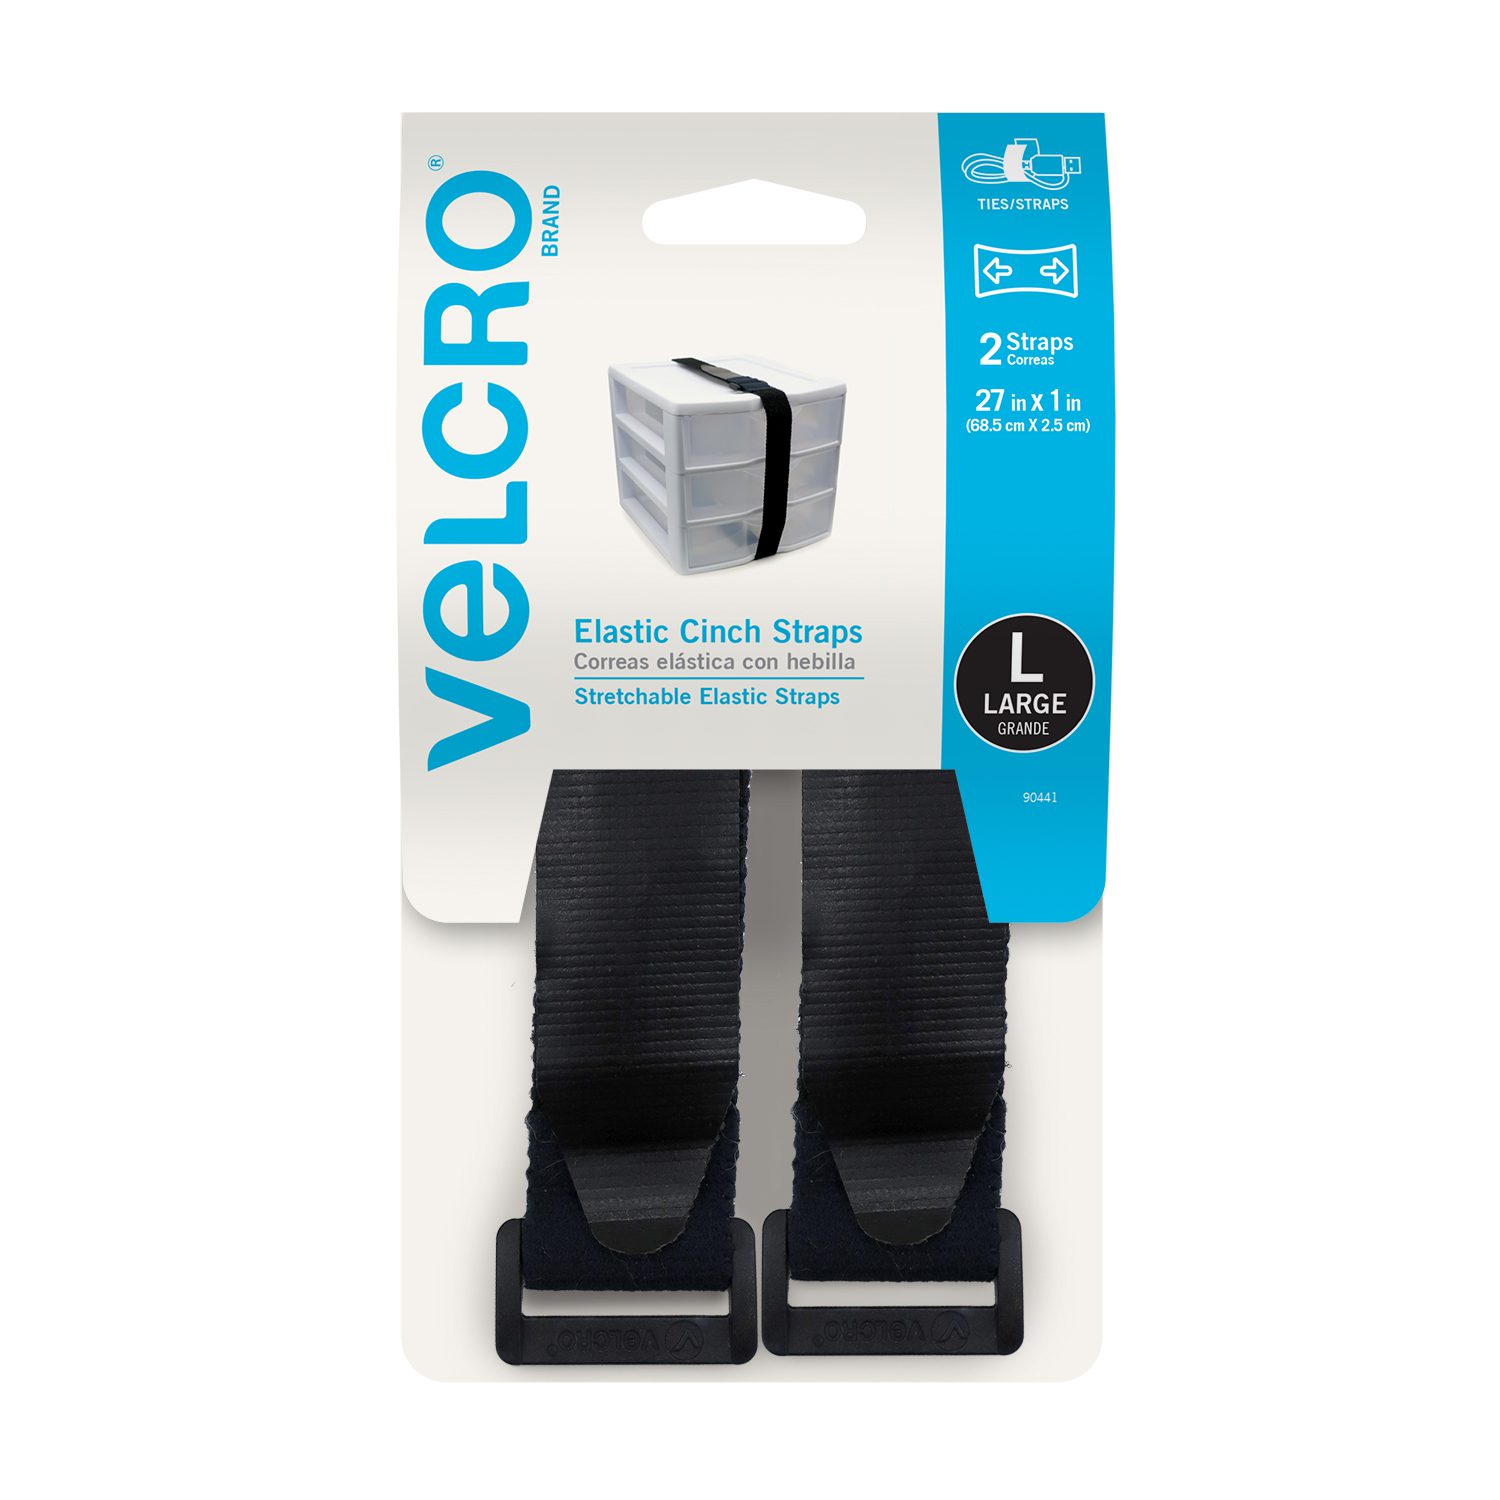 Velcro band mp c3003